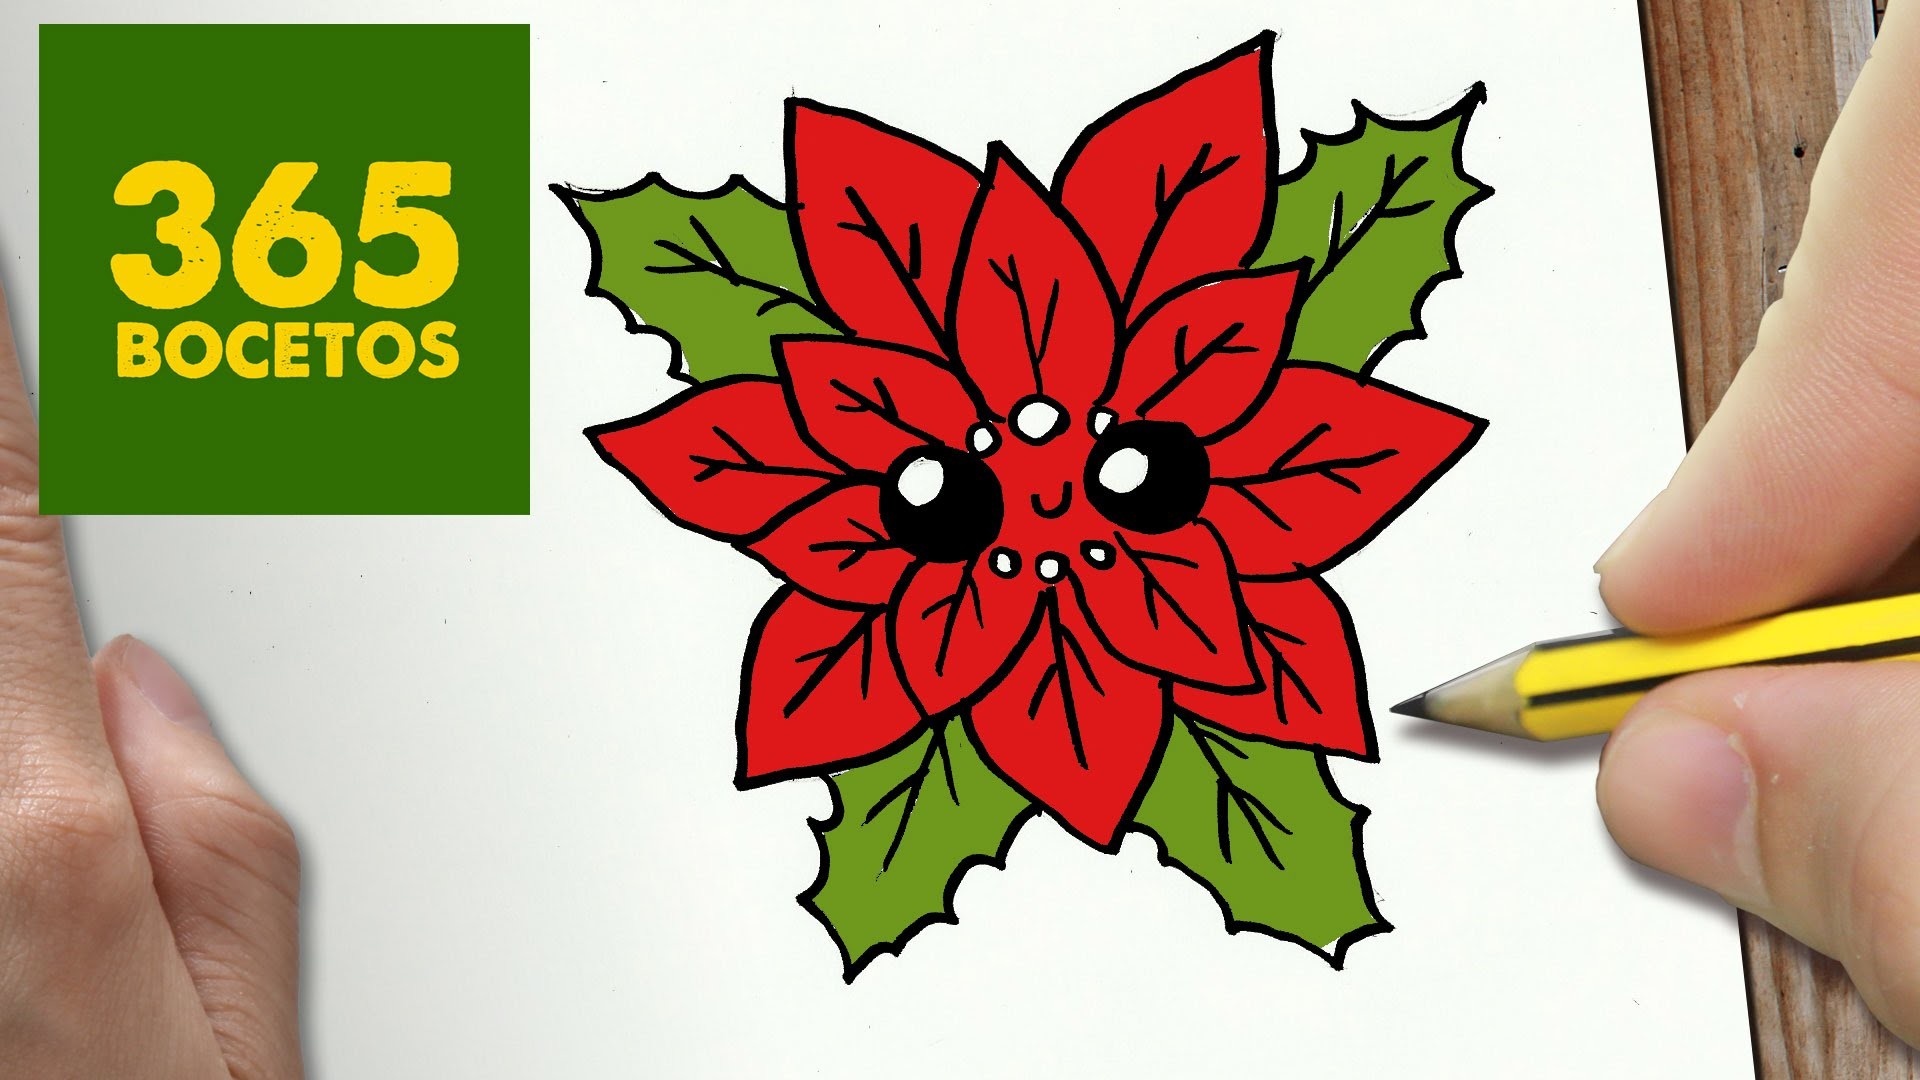 COMO DIBUJAR UN FLOR PARA NAVIDAD PASO A PASO: Dibujos kawaii navideños - How to draw a flower